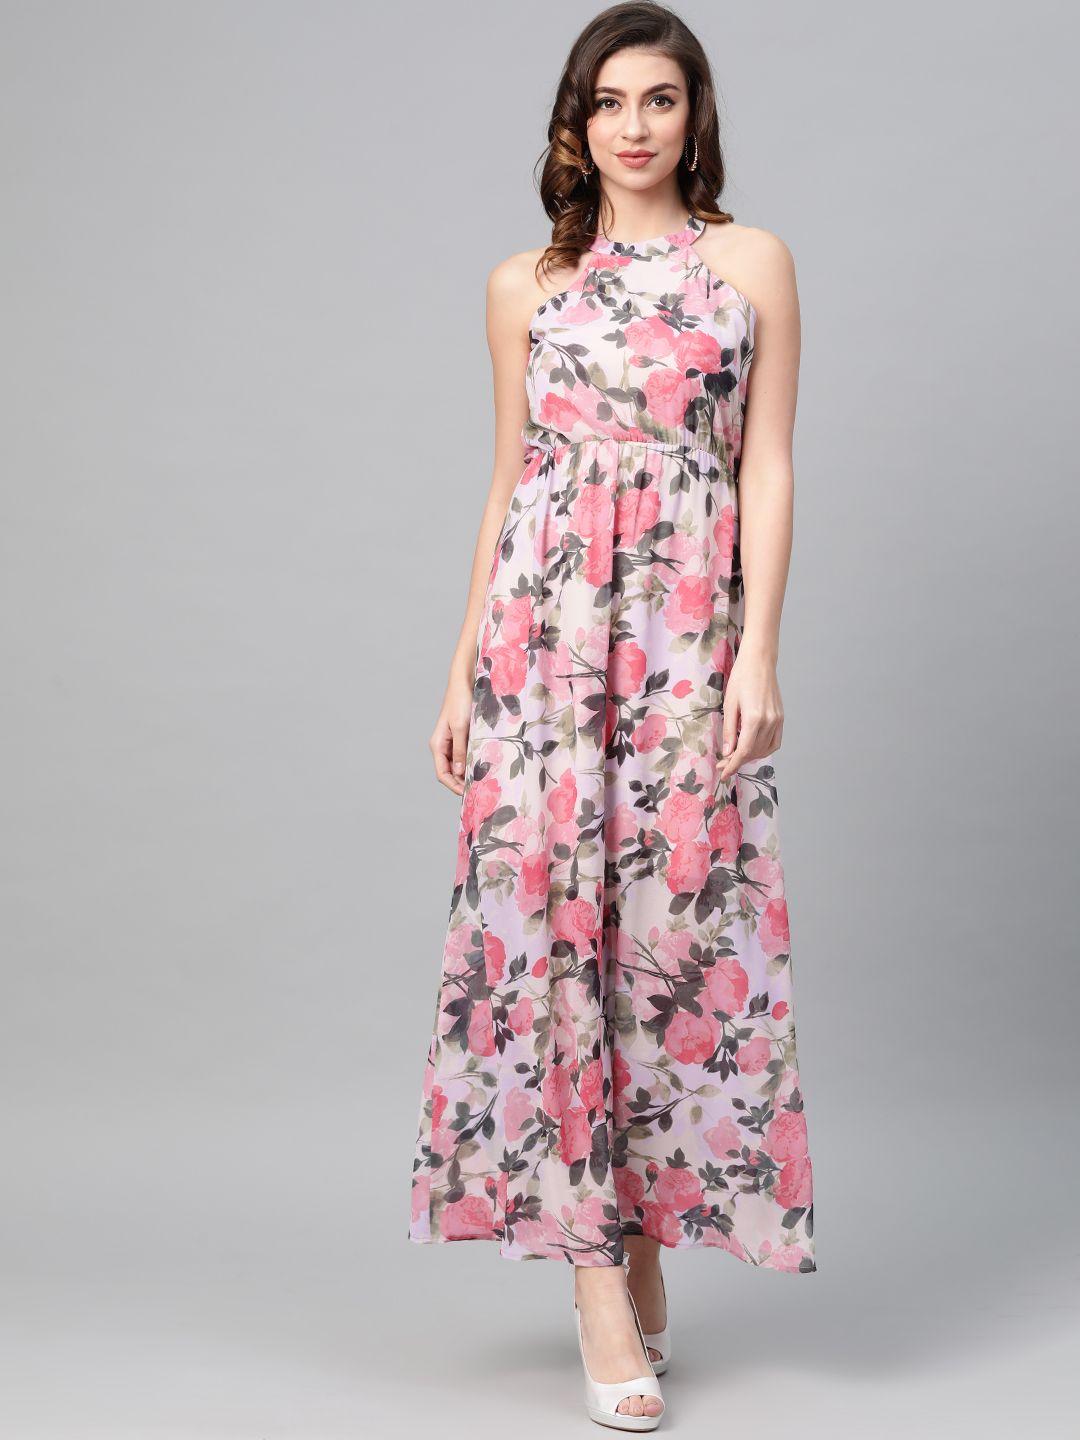 sassafras cream-coloured & pink floral printed maxi dress